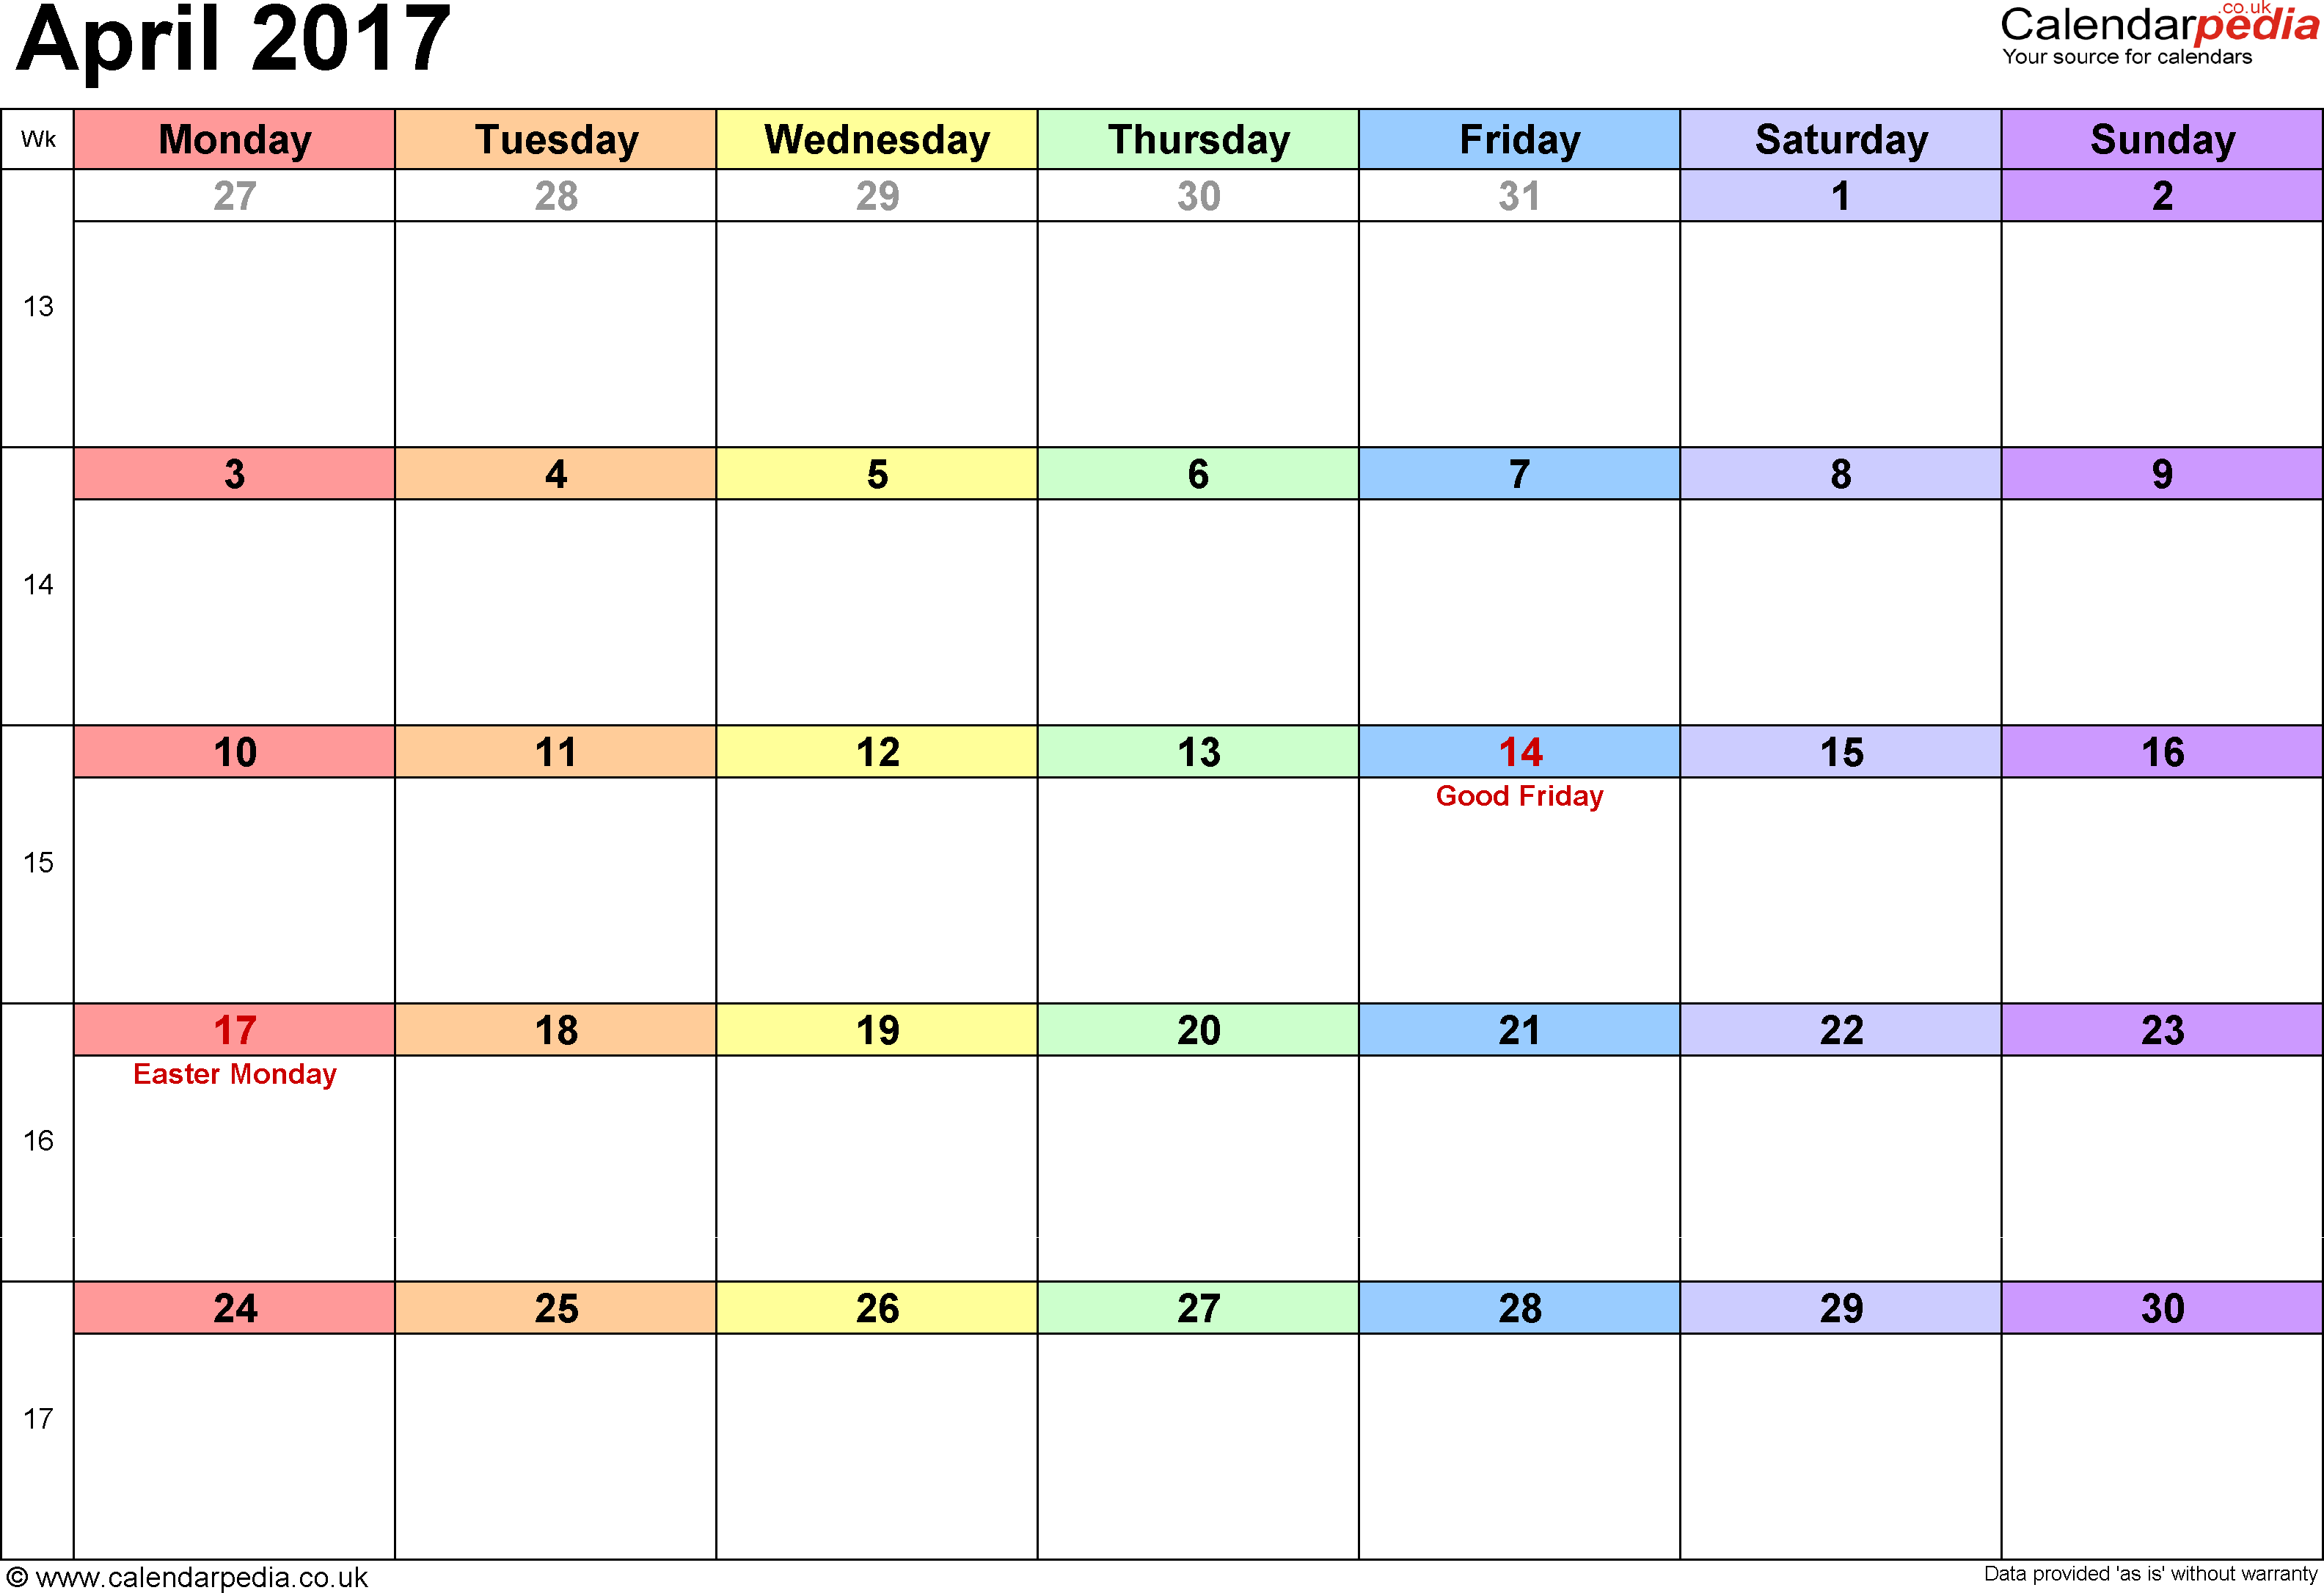 April 2017 Calendar Cute | weekly calendar template